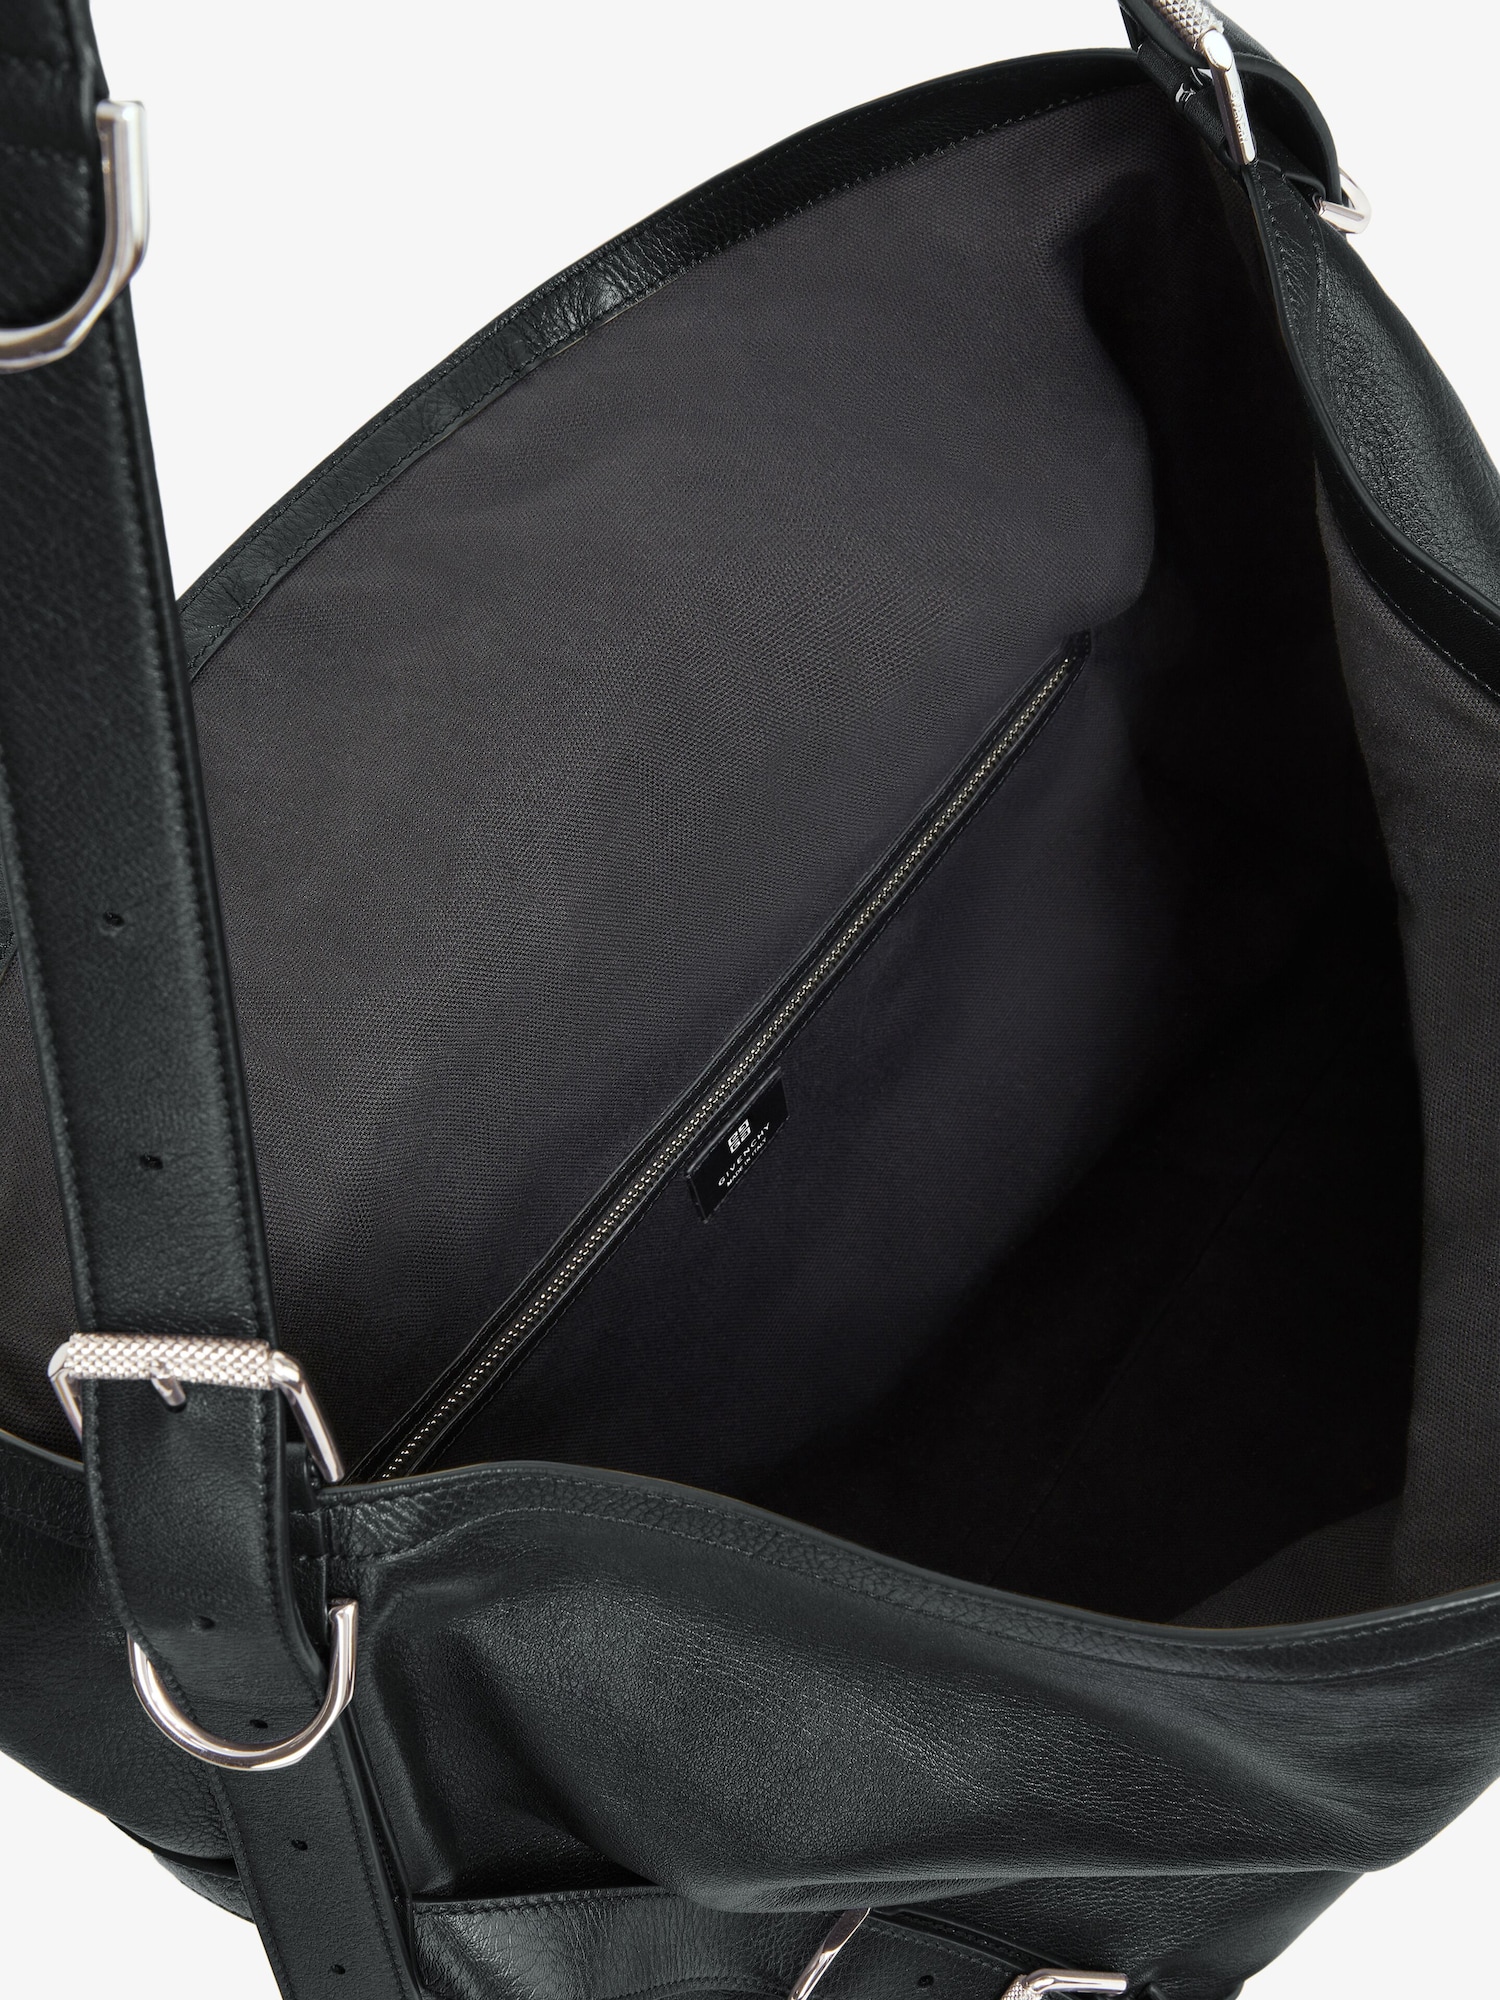 Givenchy Classic Messenger Bag in Black for Men